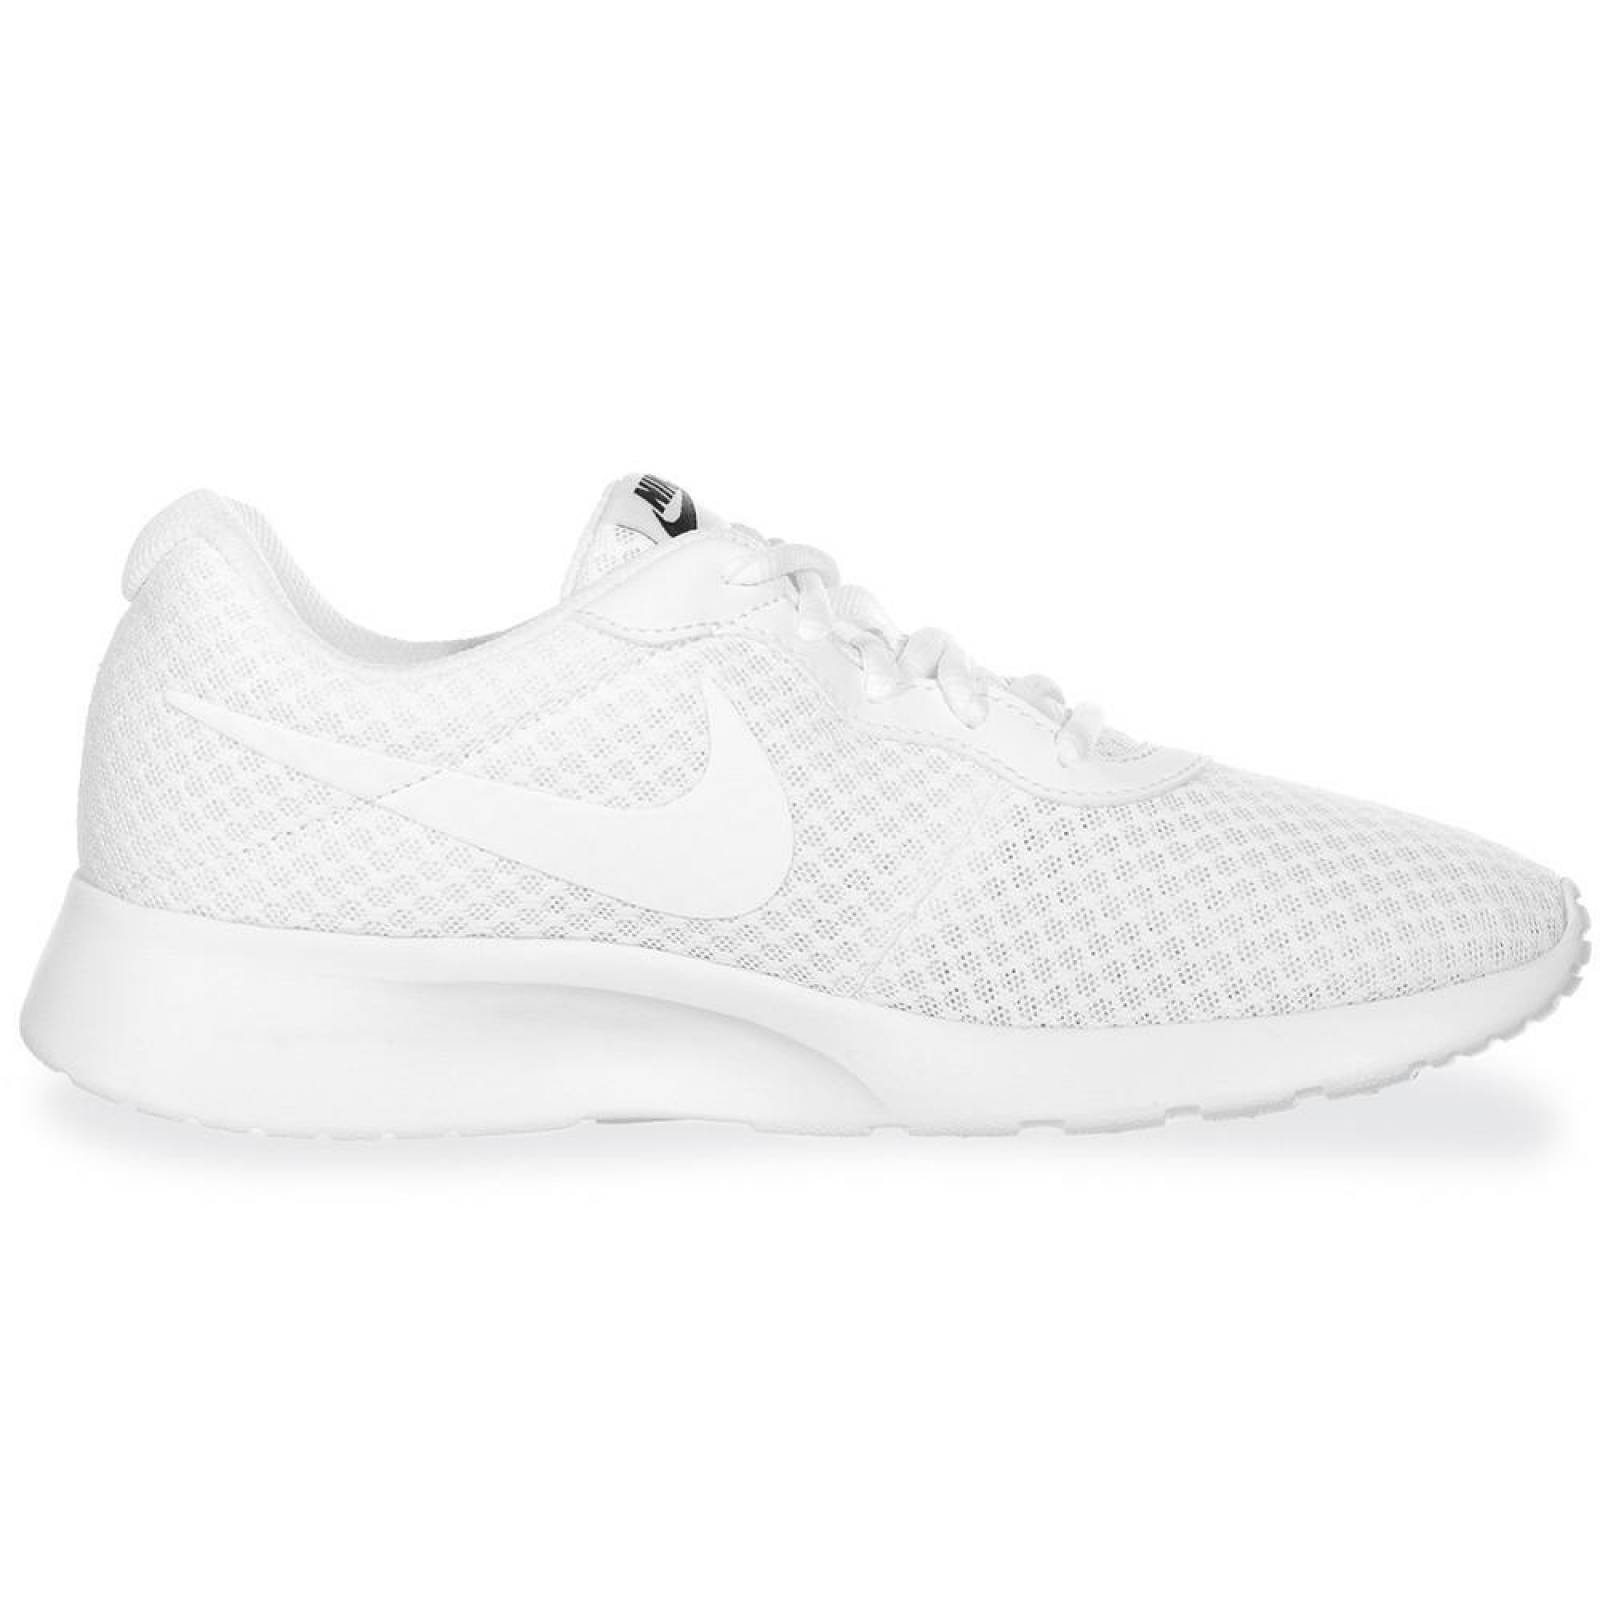 tenis nike blancos deportivos Nike online – Compra productos Nike baratos